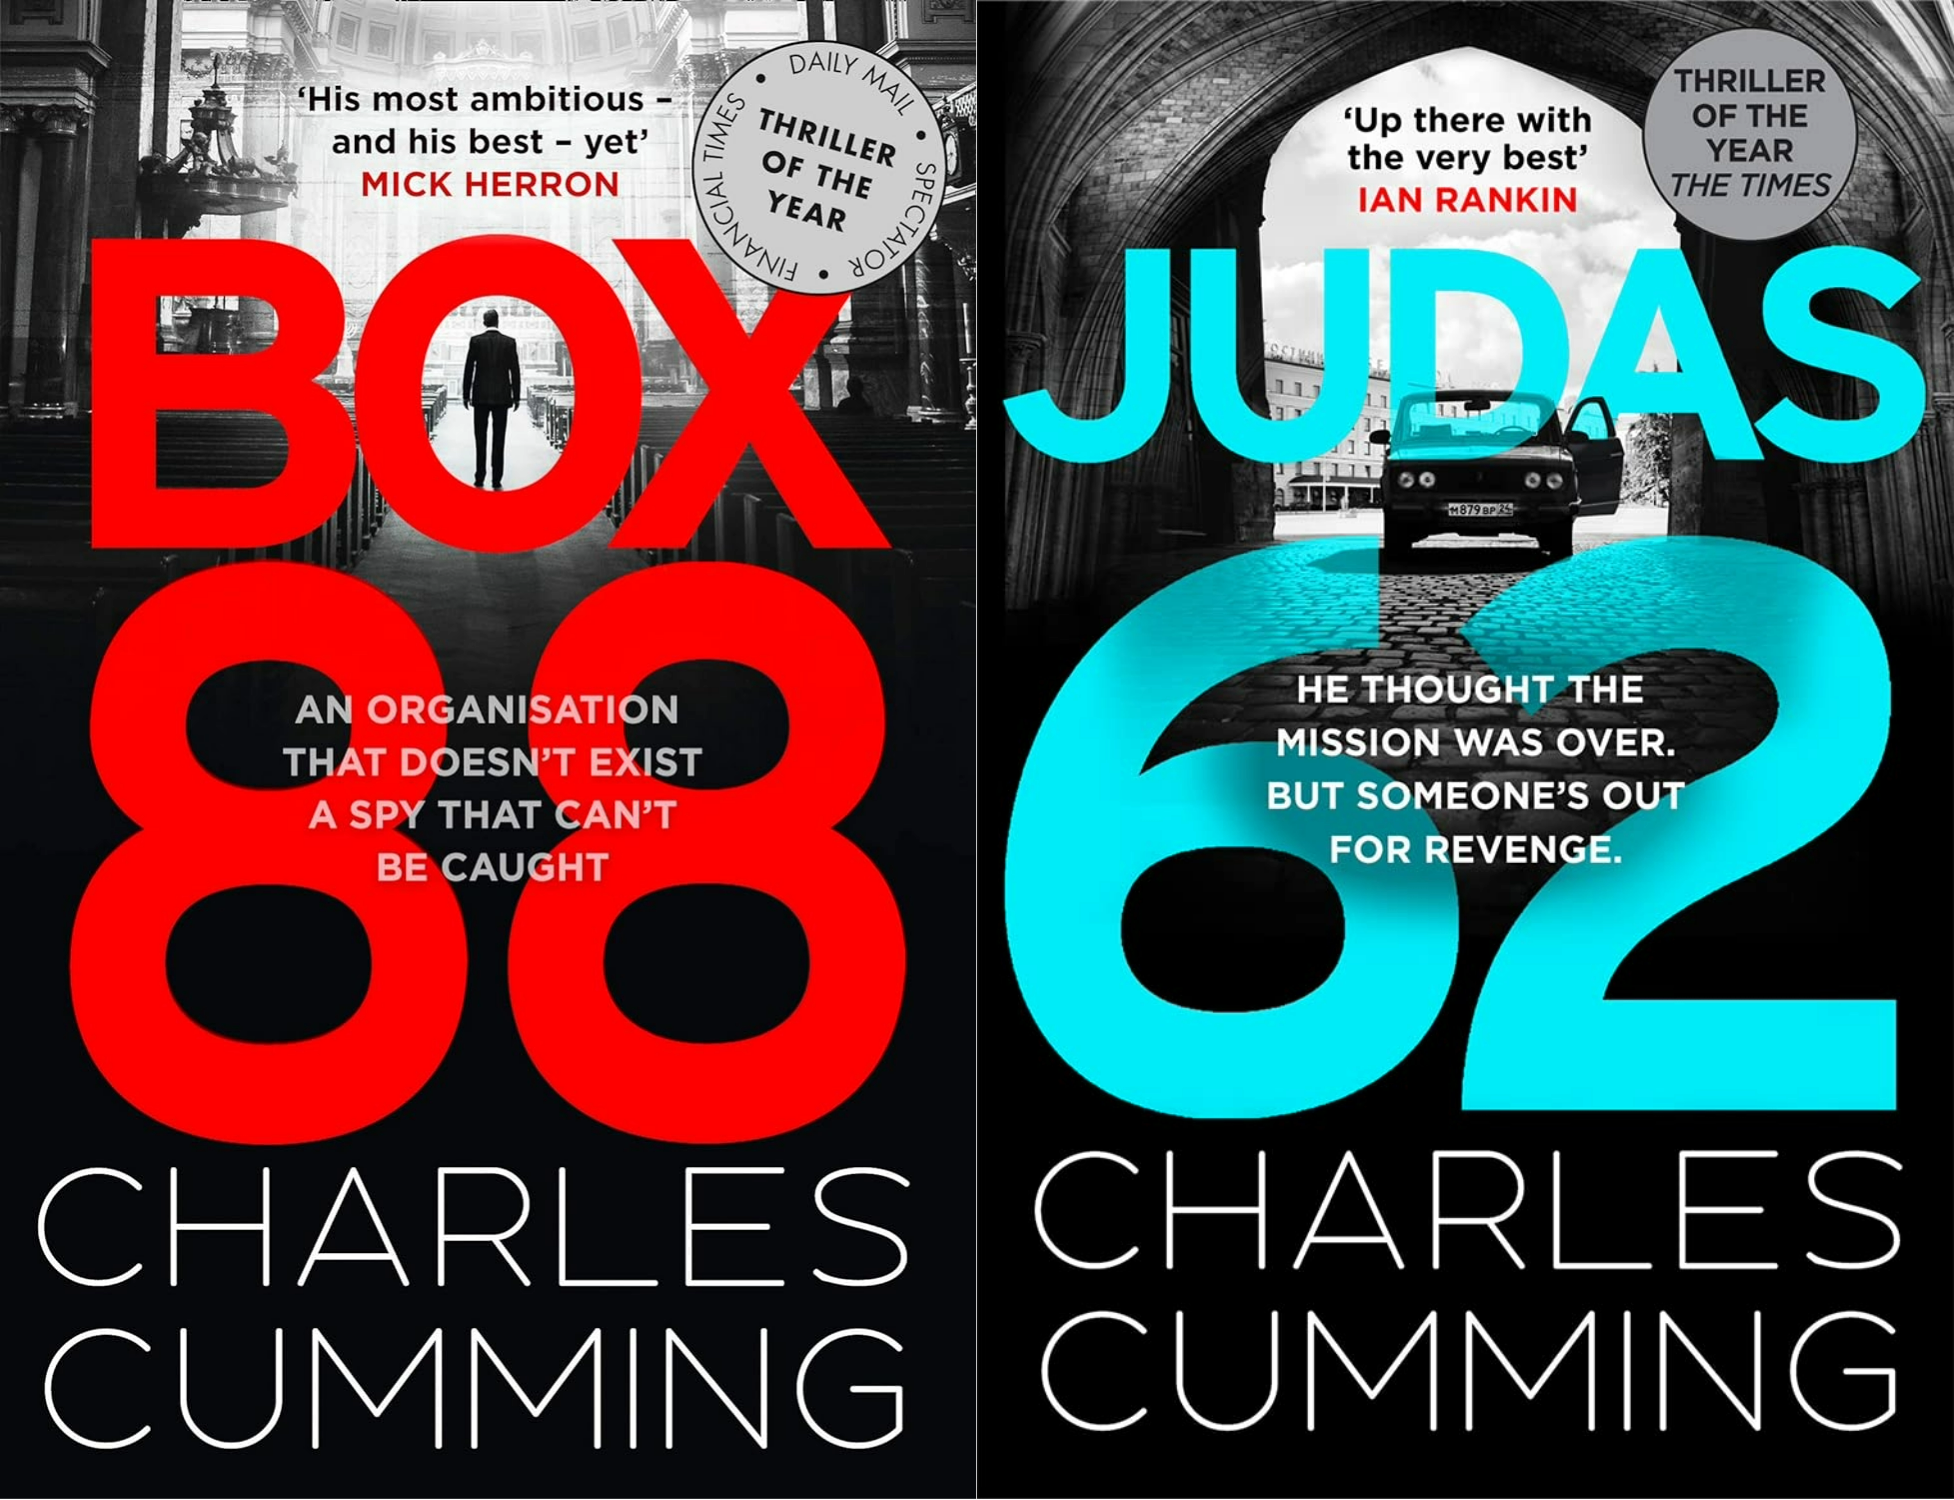 Box 88 and Judas 62 by Charles Cumming